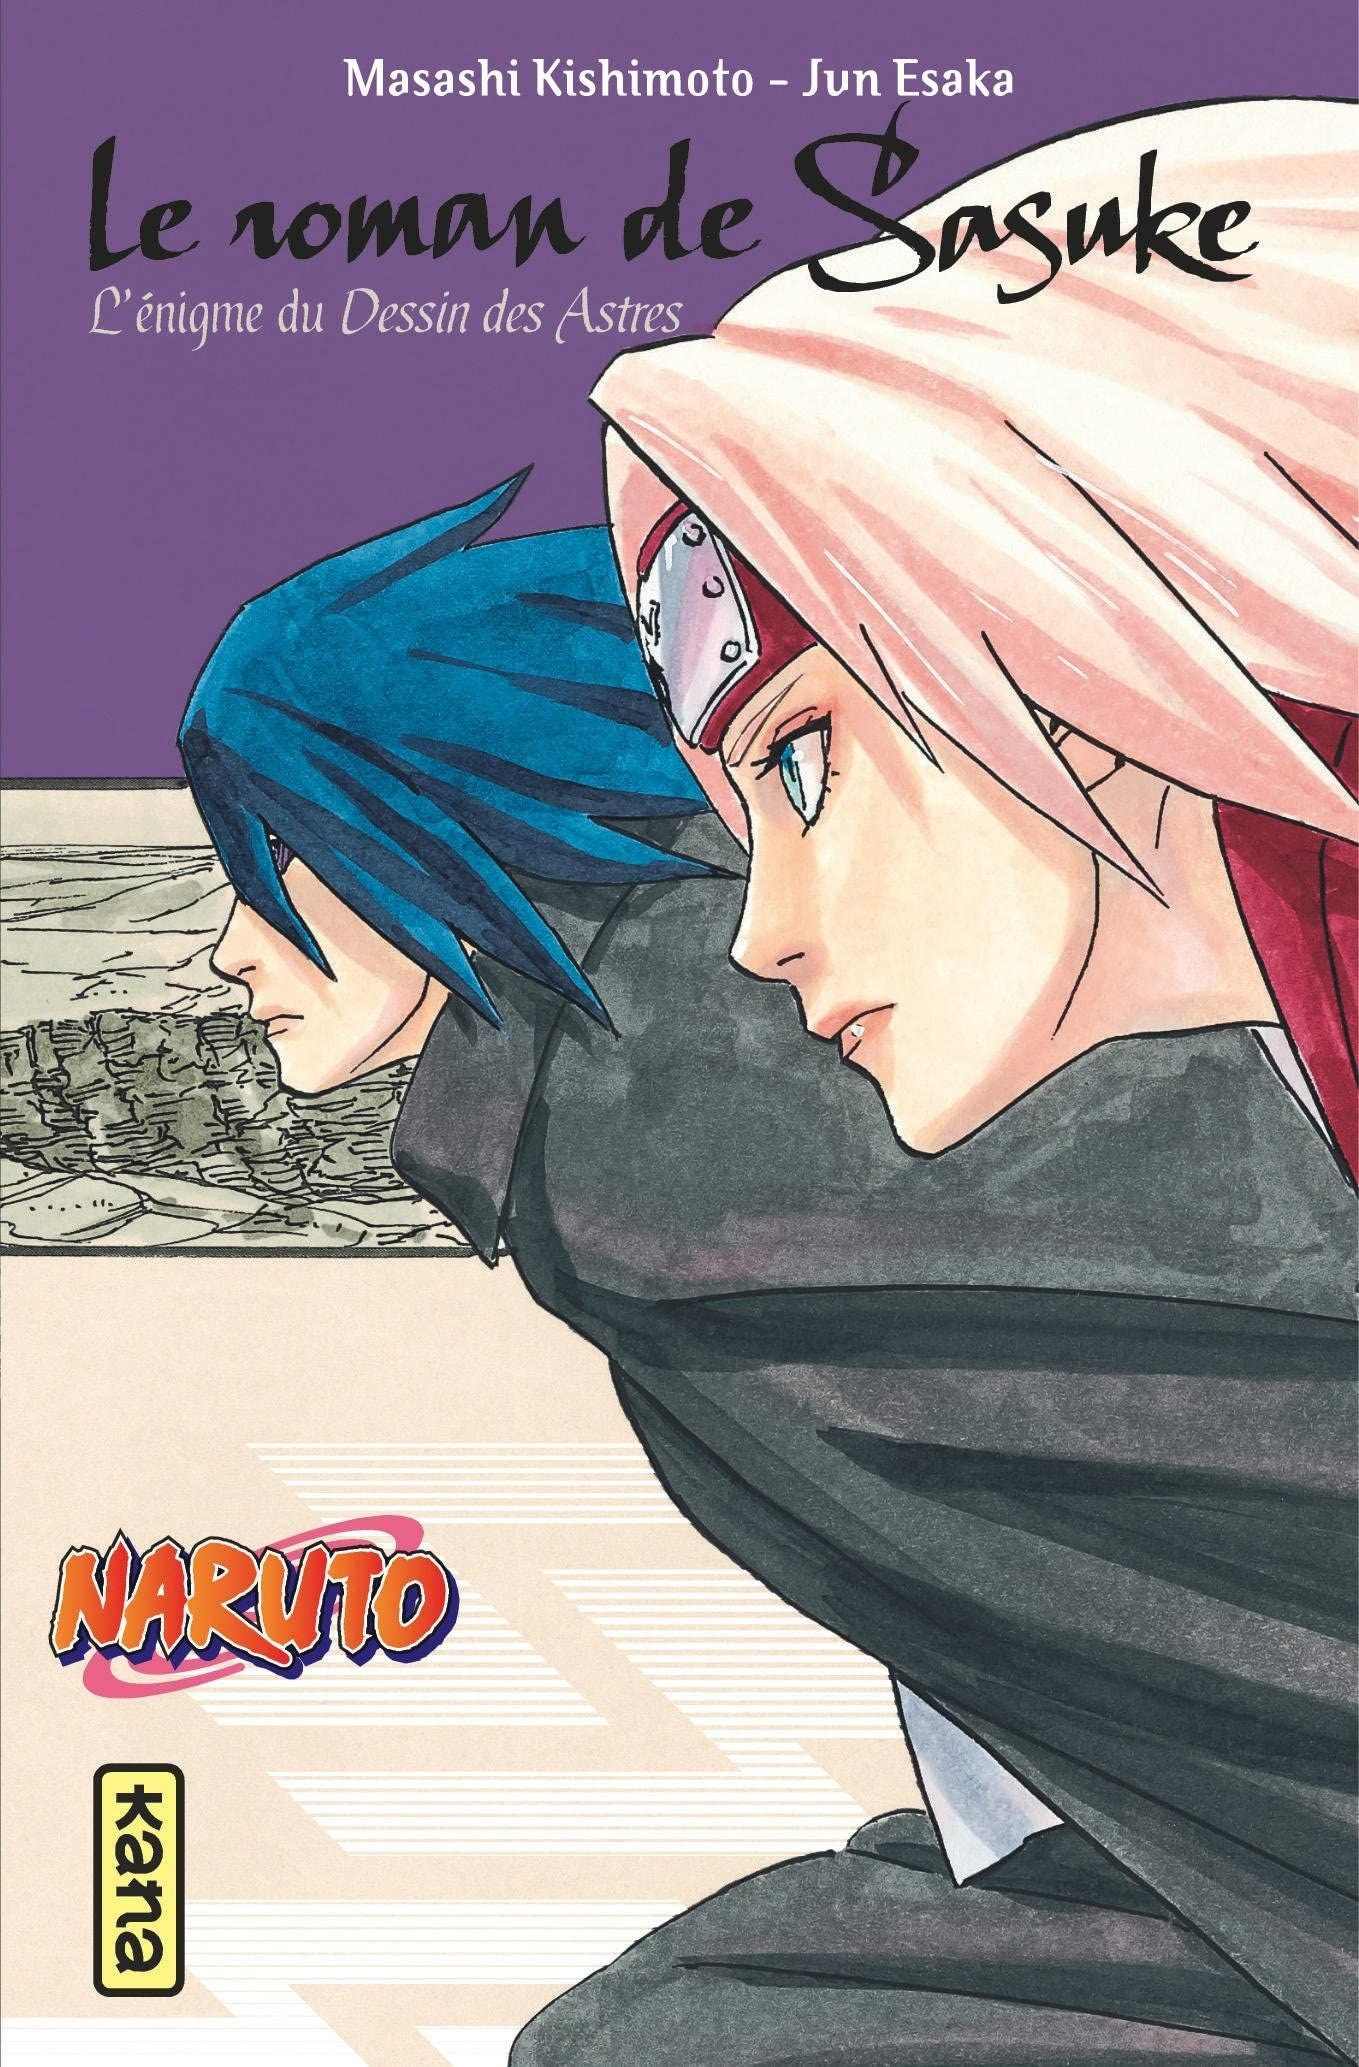 Naruto - Le roman de Sasuke Retsuden